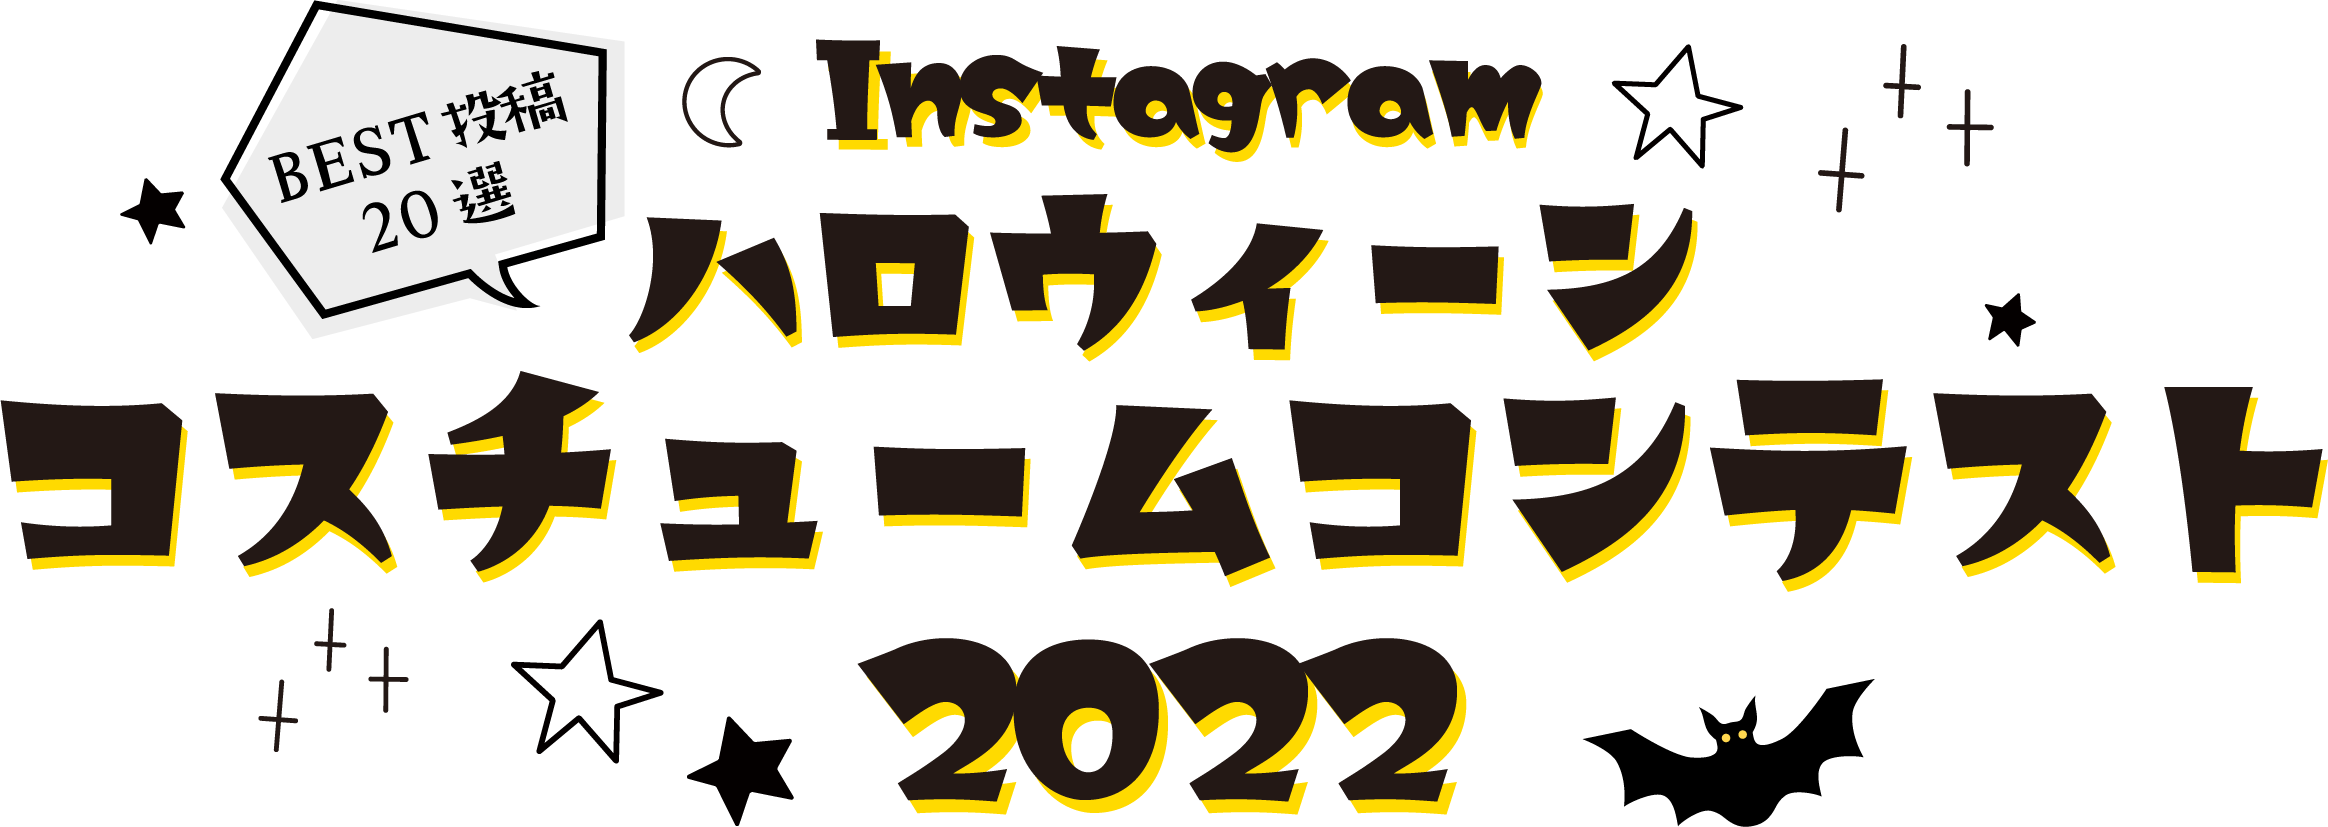 instagram ハロウィーン コスチュームコンテスト 2022 BEST投稿20選